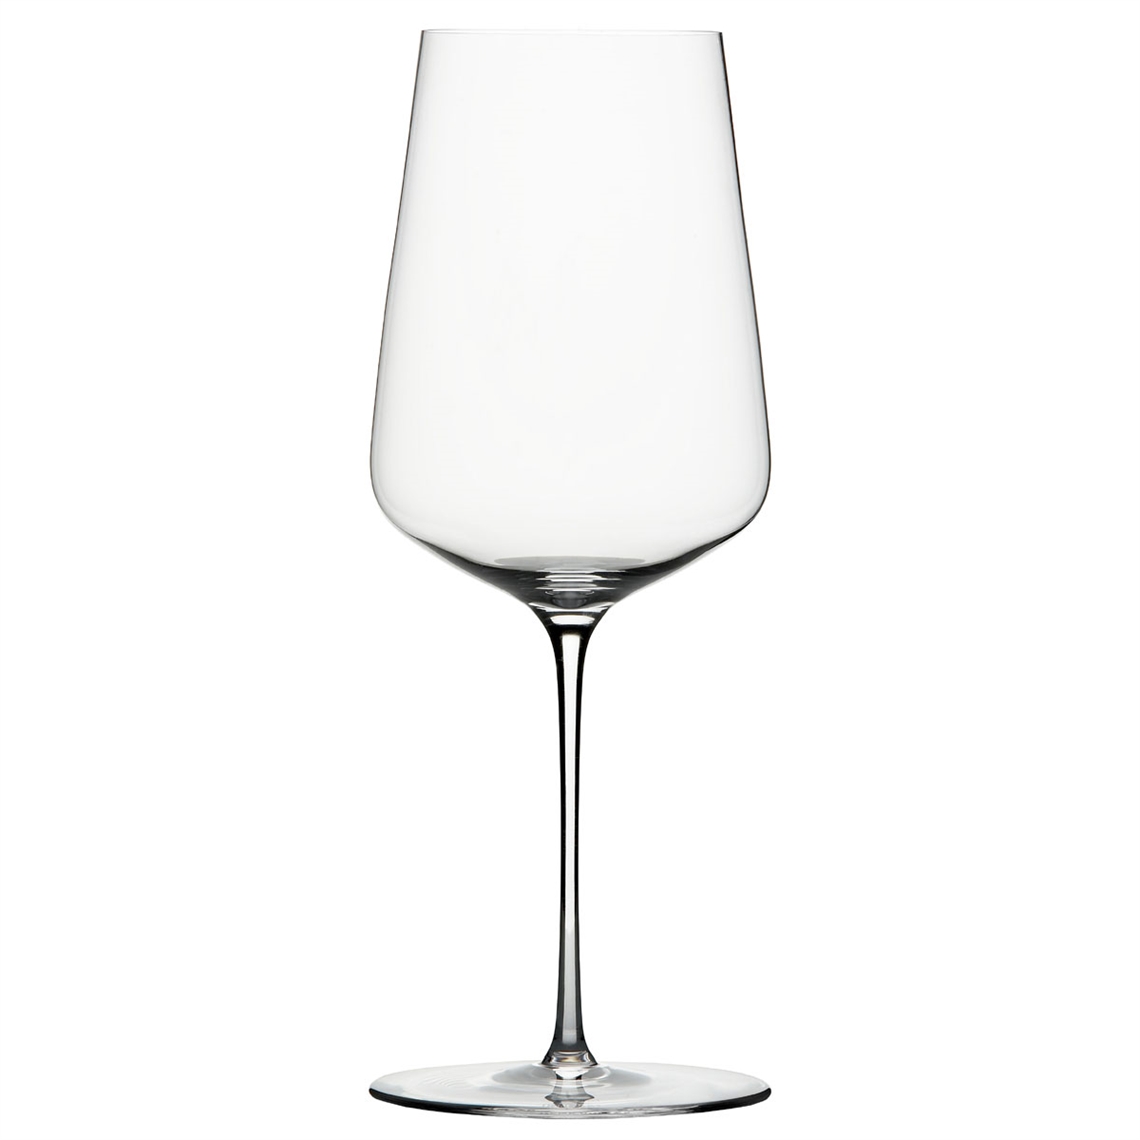 Zalto Denk Art Universal Red & White Wine Glass - Set of 6